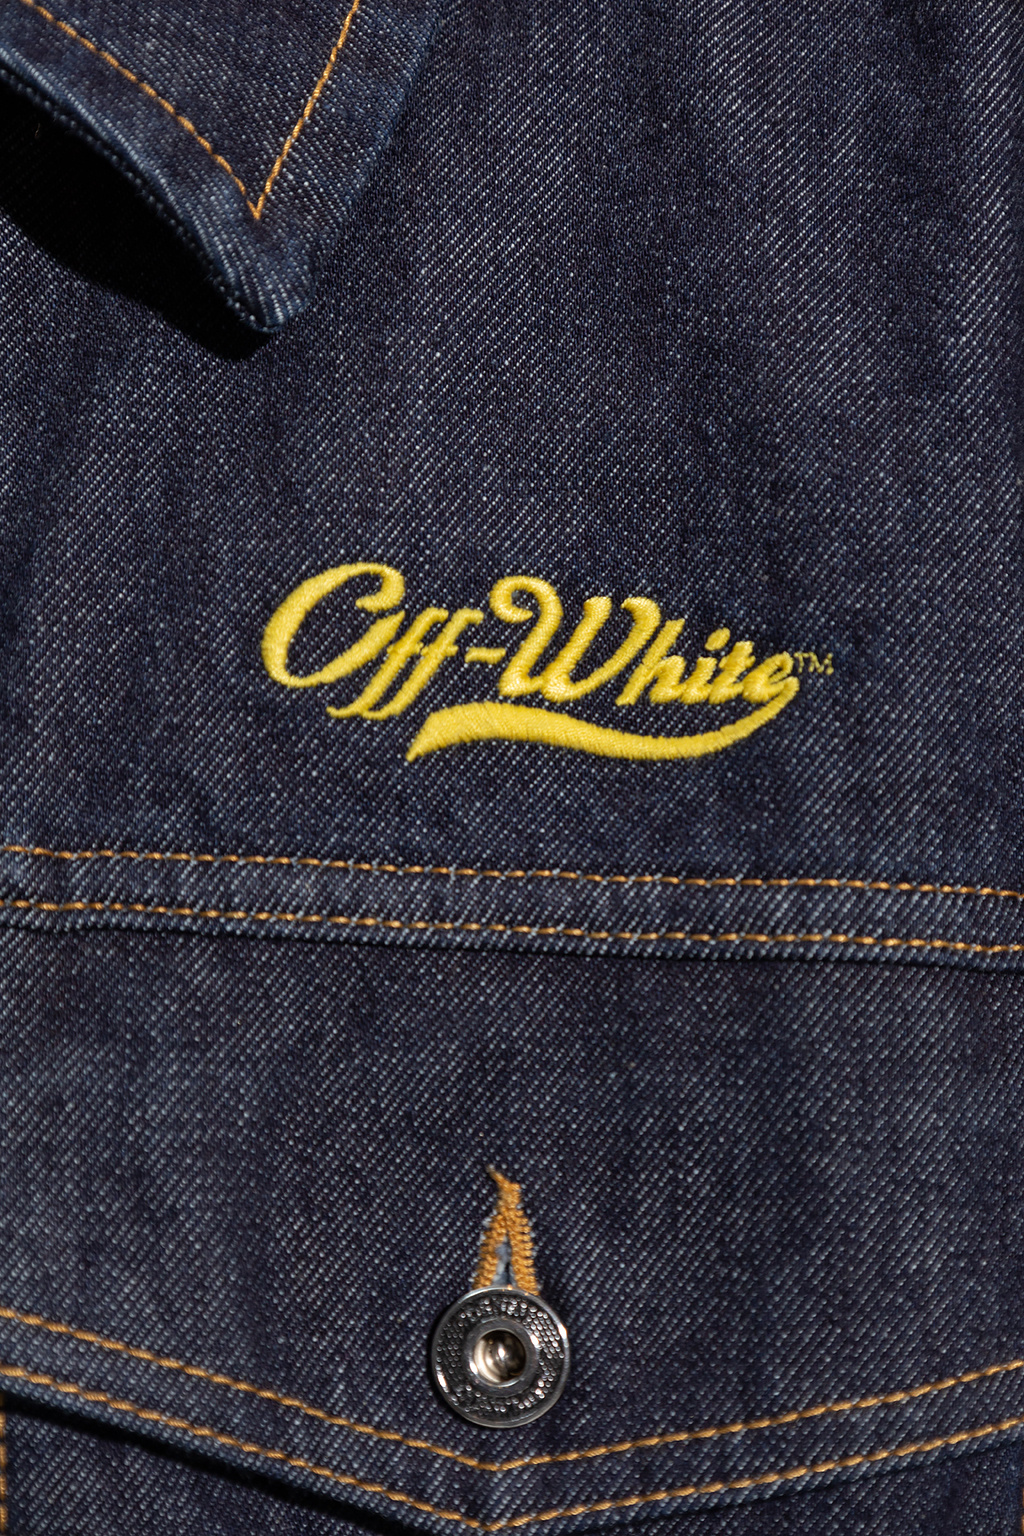 Off-White maison margiela upside down embroidered logo sweatshirt item